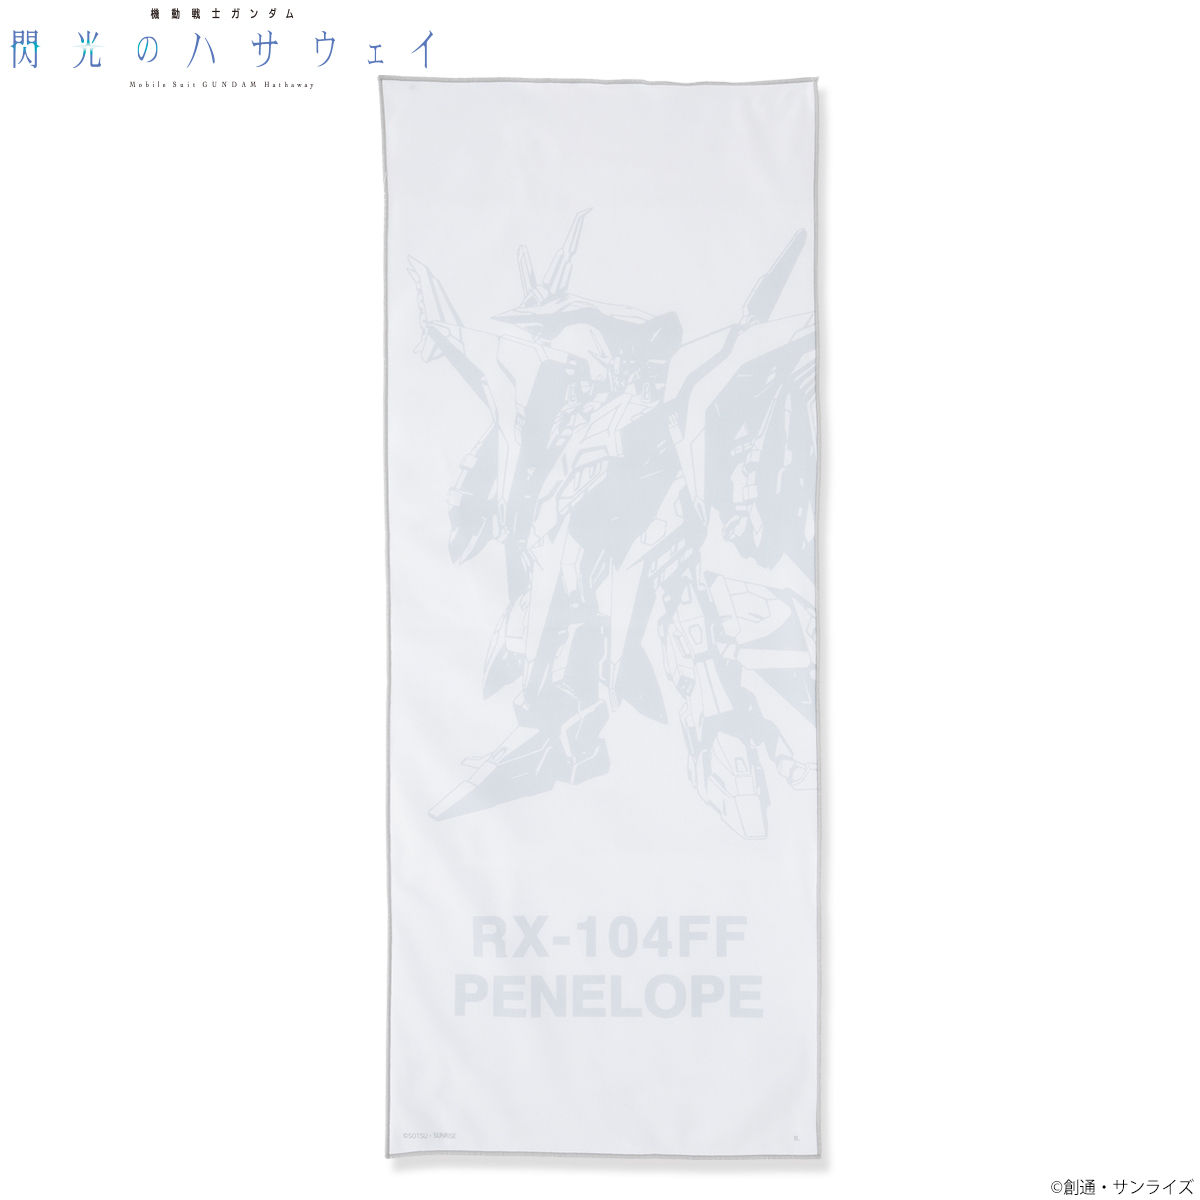 Towel—Mobile Suit Gundam Hathaway